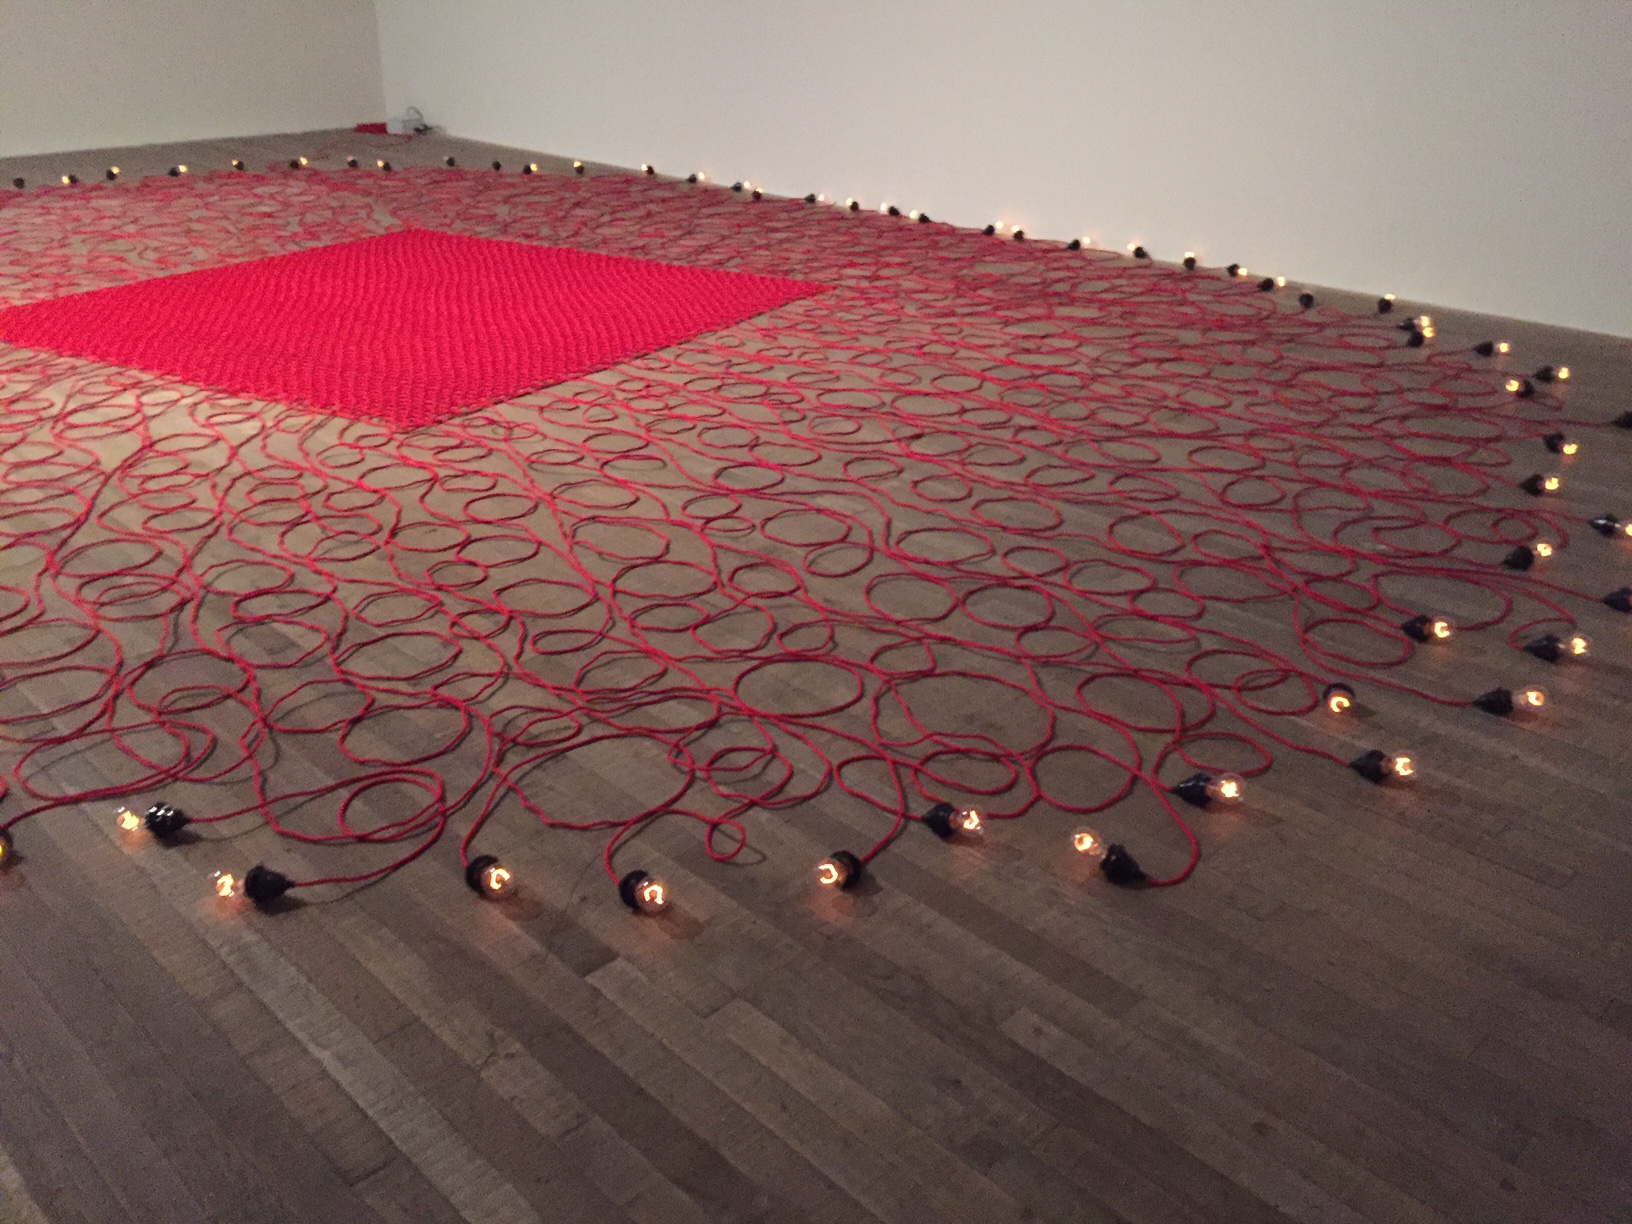 Undercurrent (red) 2008 - Mona Hatoum at Tate Modern, photo Mat Smith